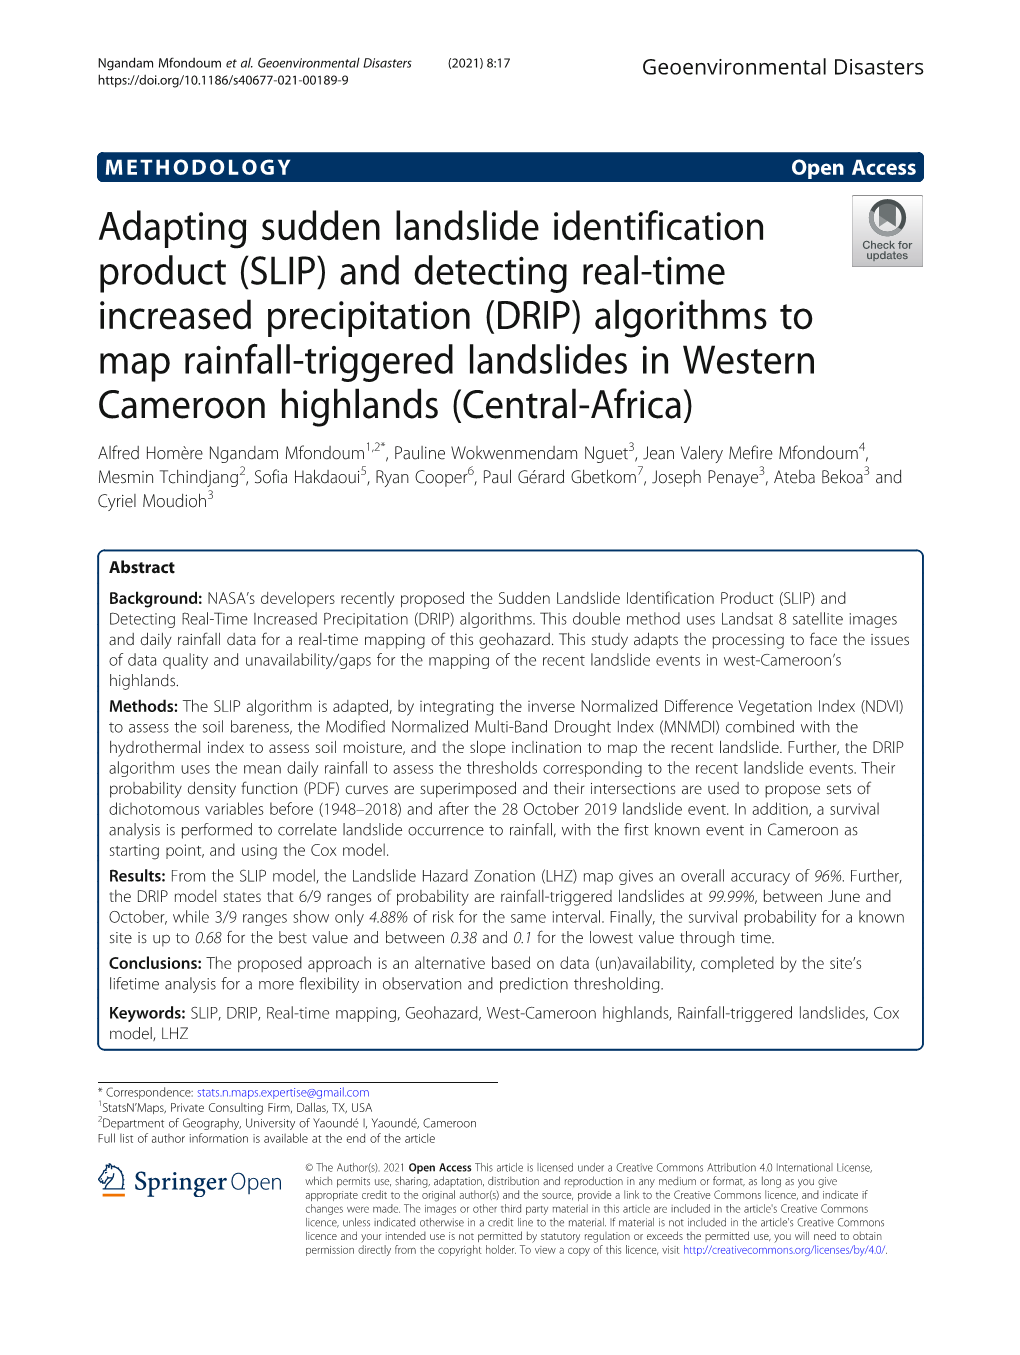 Adapting Sudden Landslide Identification Product (SLIP) And